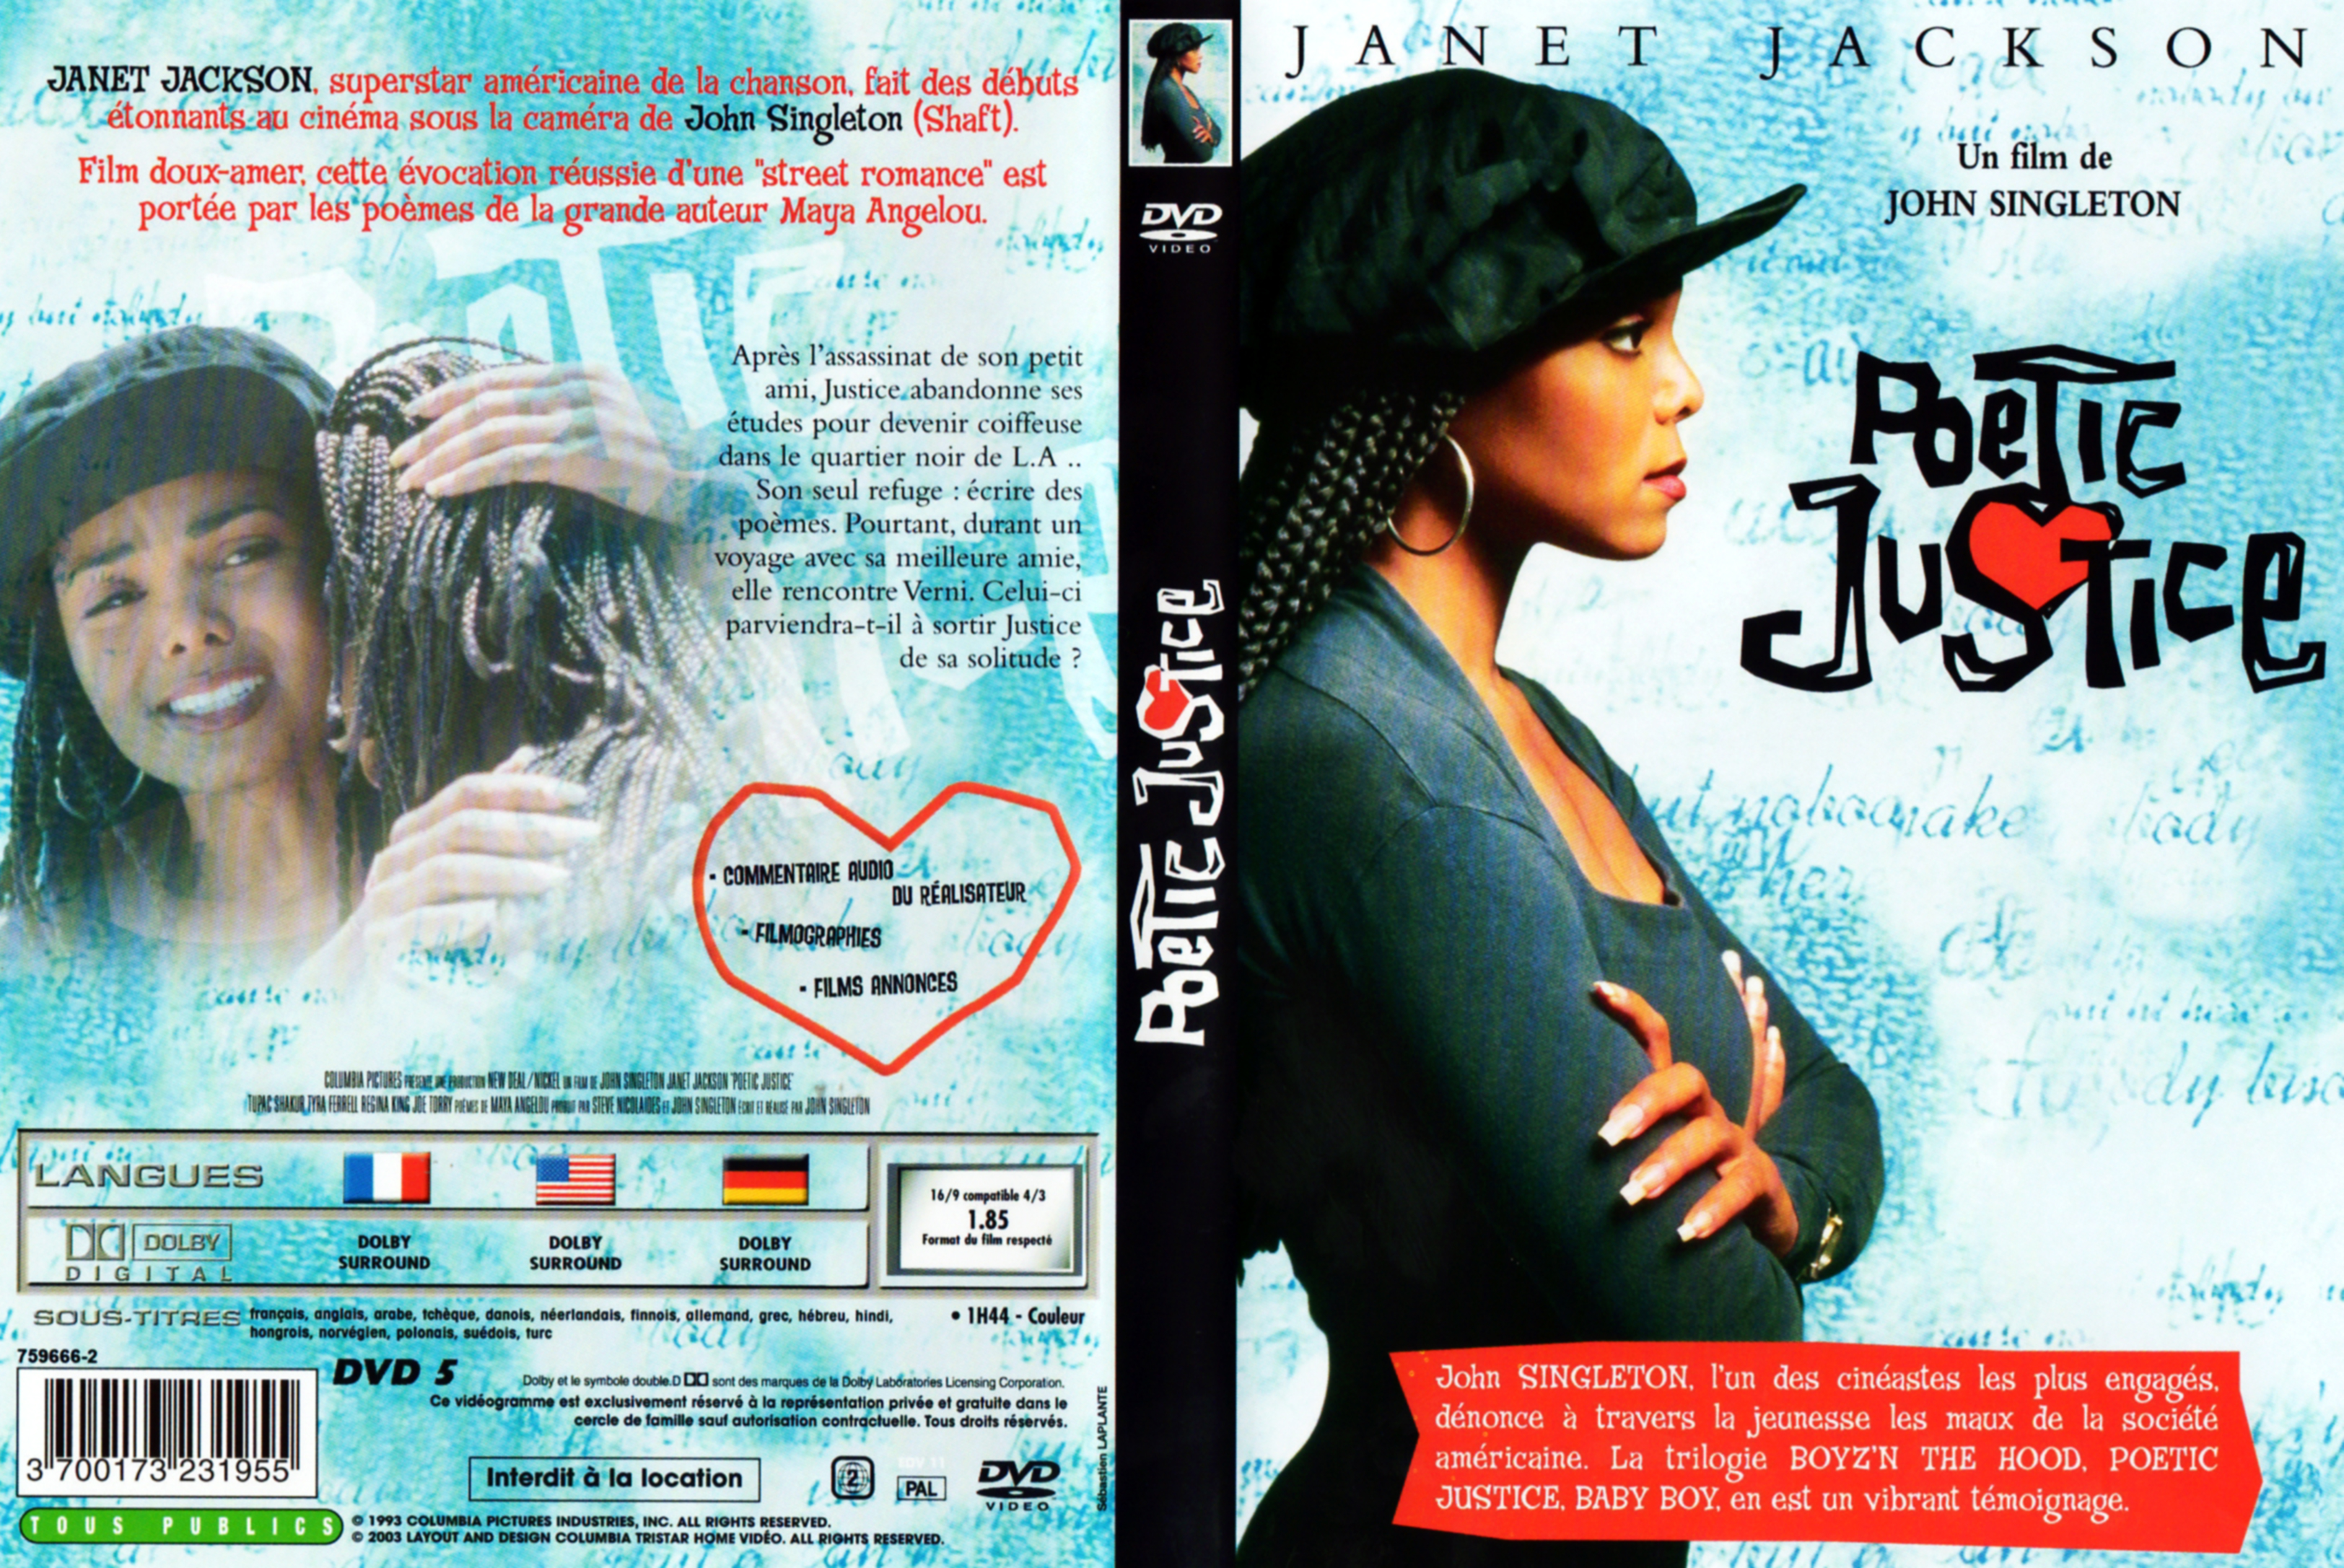 Jaquette DVD Poetic Justice